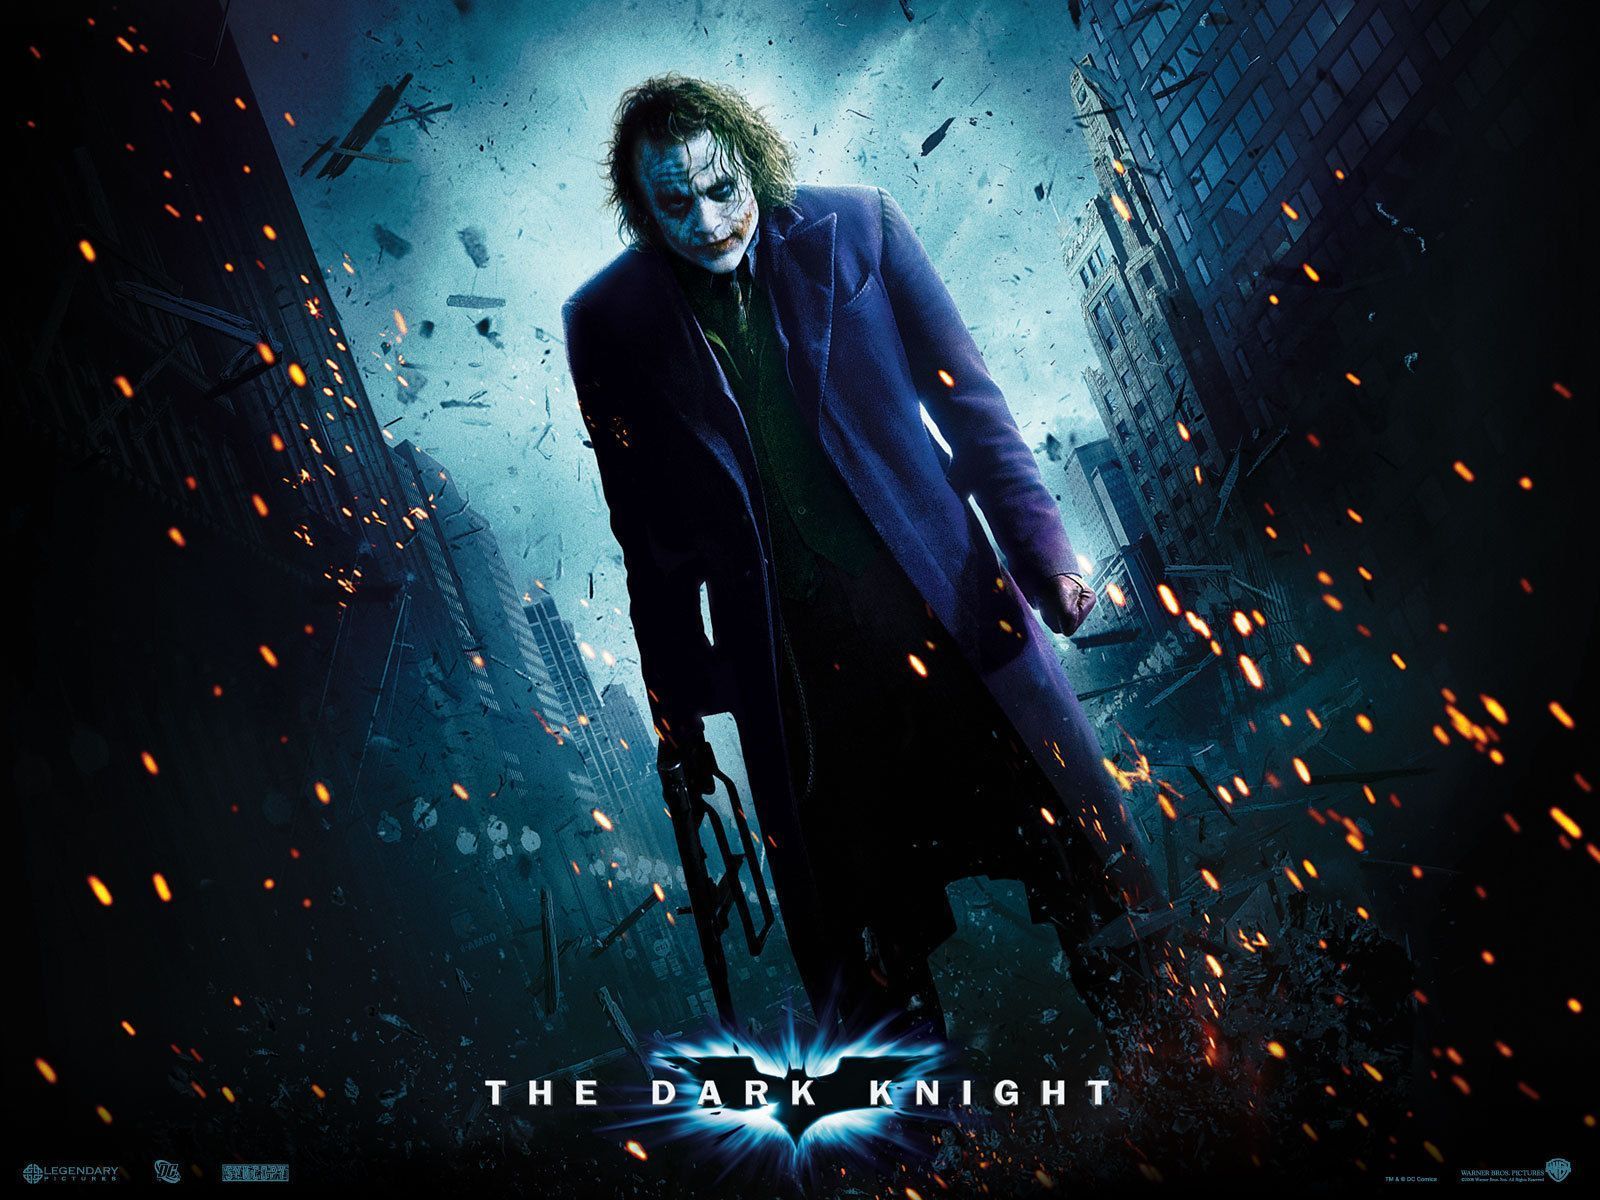 Heath Ledger as The Joker - Gotham City Wallpaper 9970933 - Fanpop